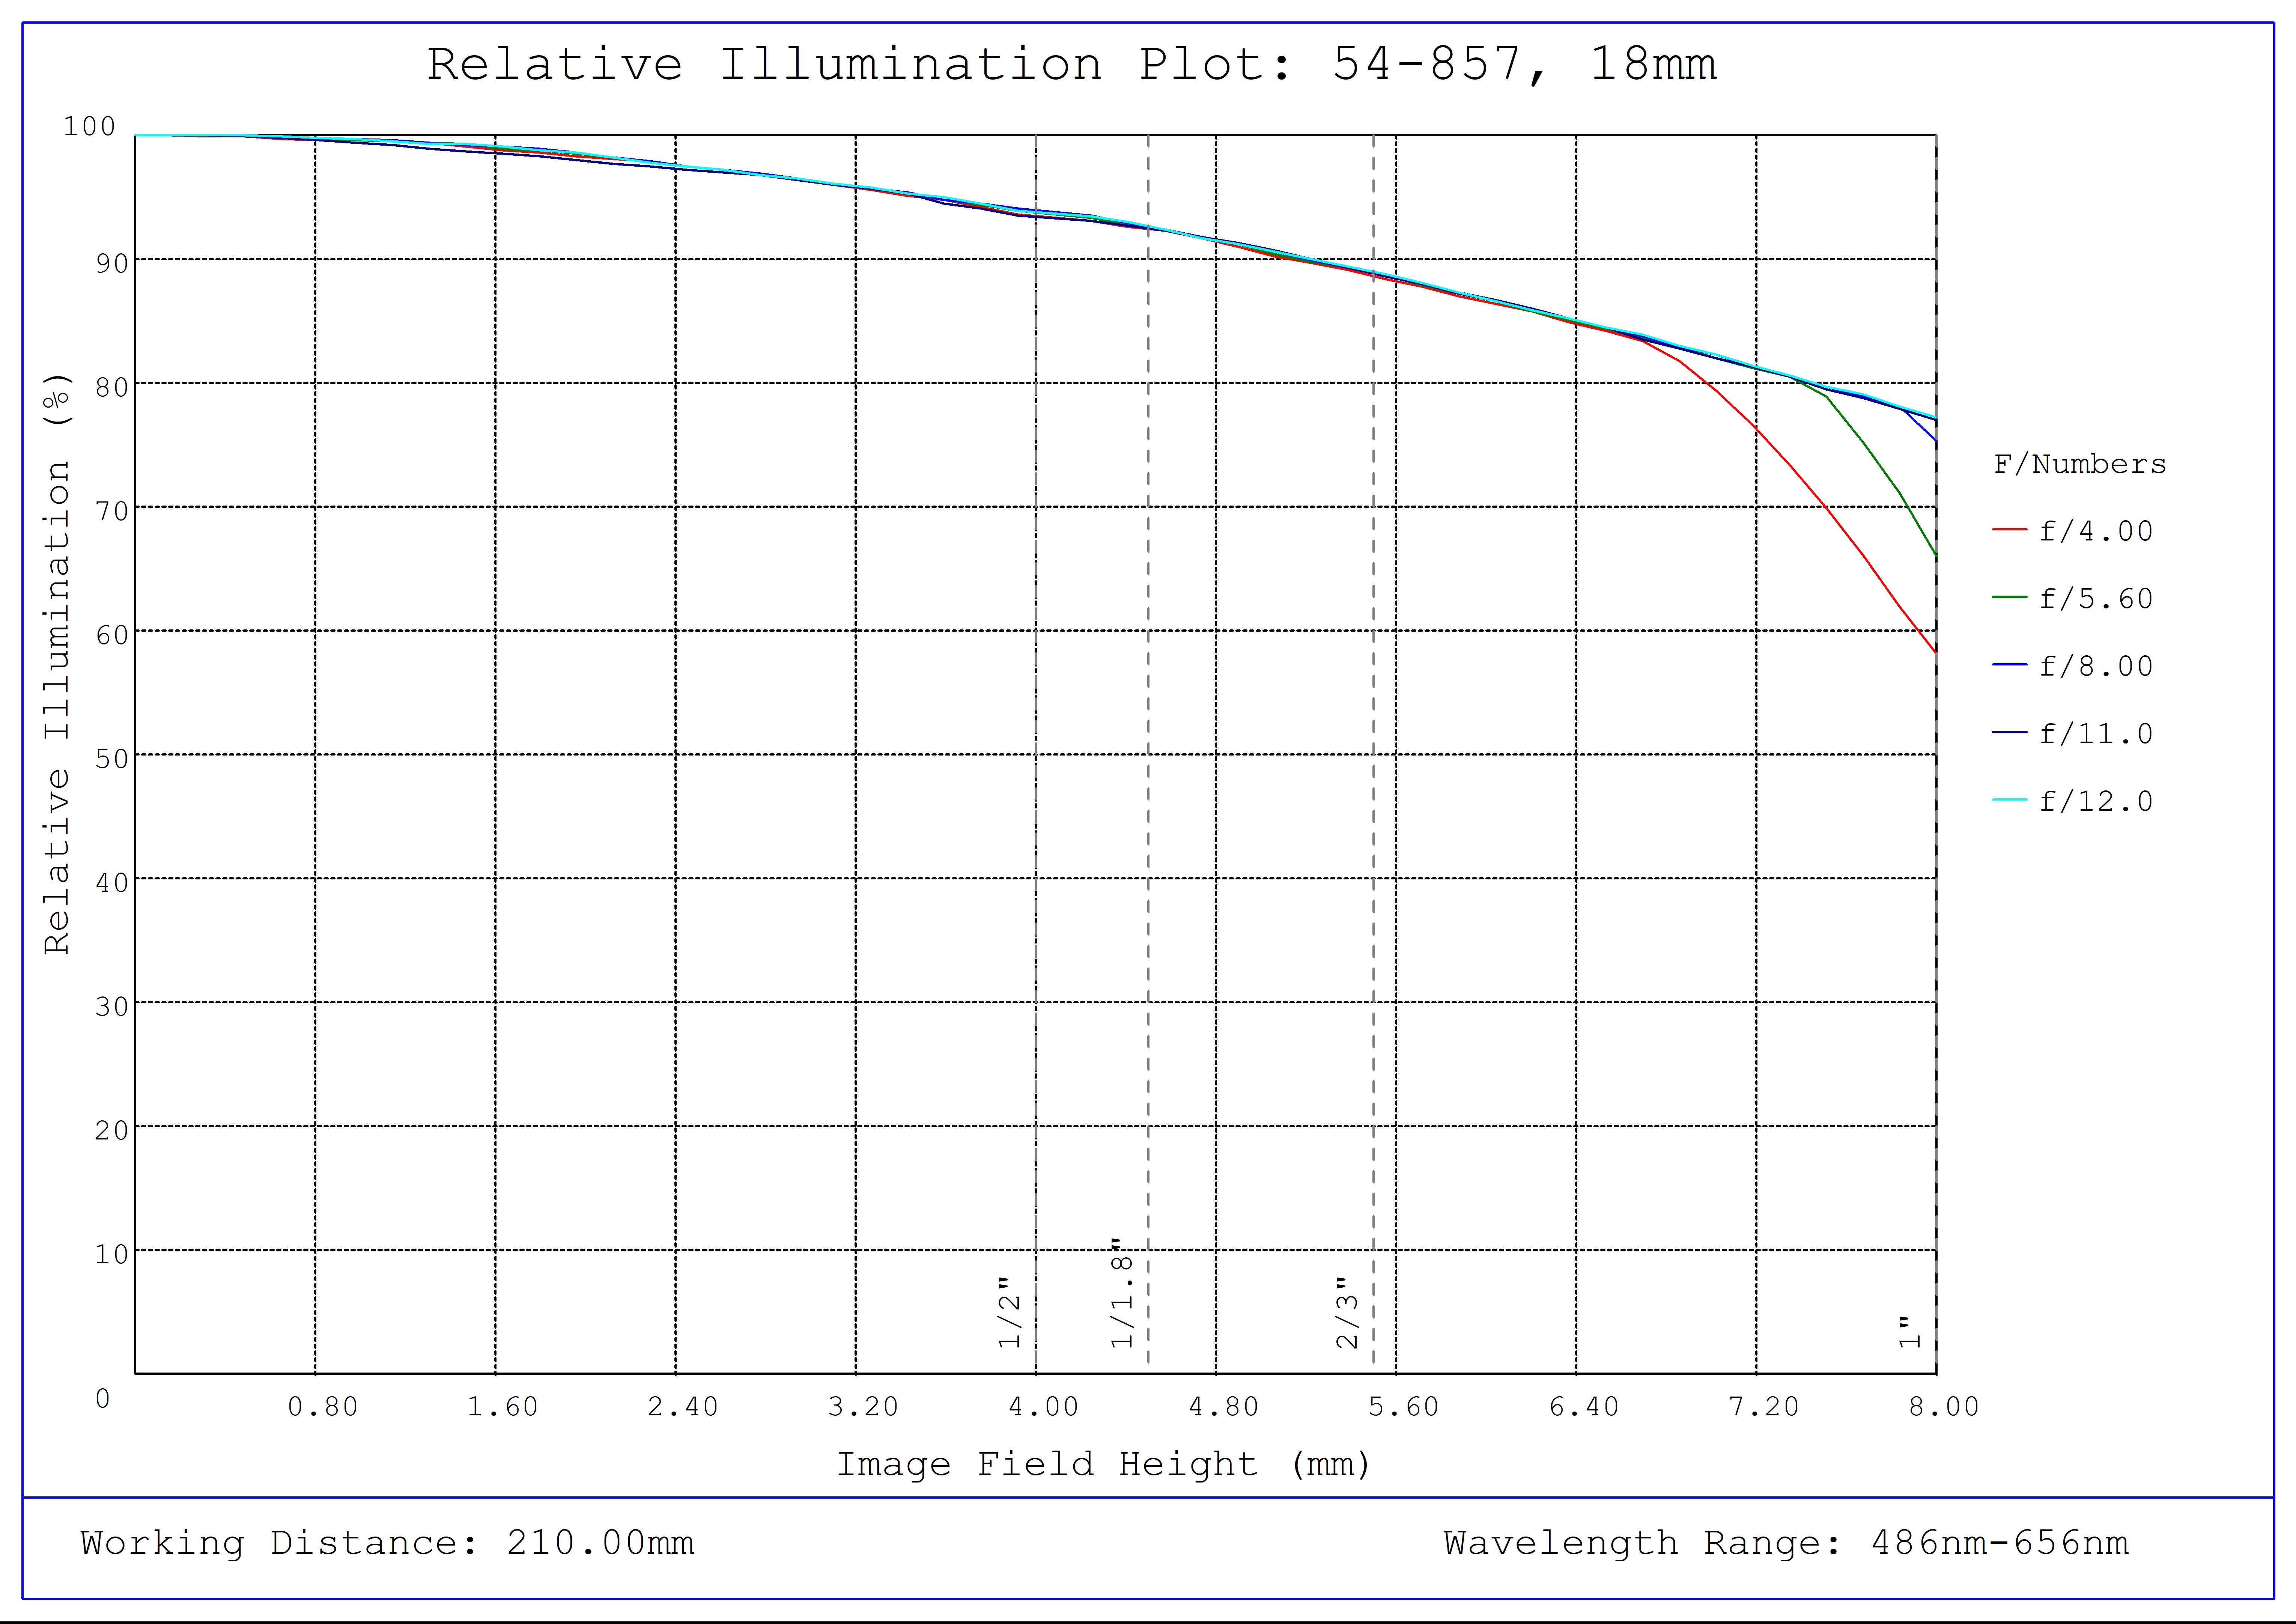 #54-857, 18mm DG Series Fixed Focal Length Lens, Relative Illumination Plot